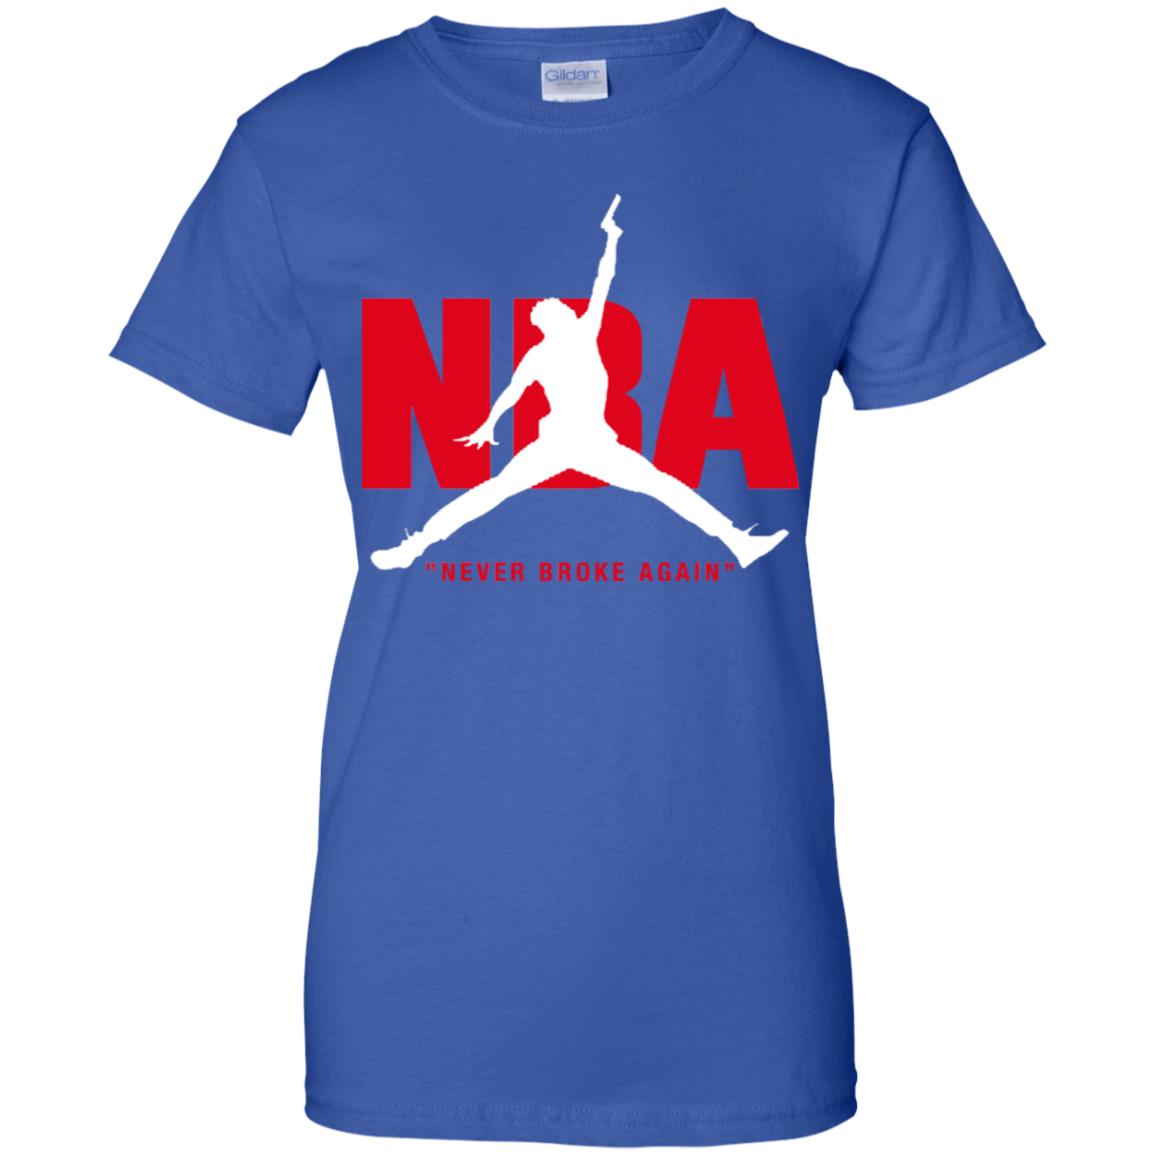 NBA Jam Nets Coleman And Petrovic T-Shirts, Hoodies, Sweatshirt